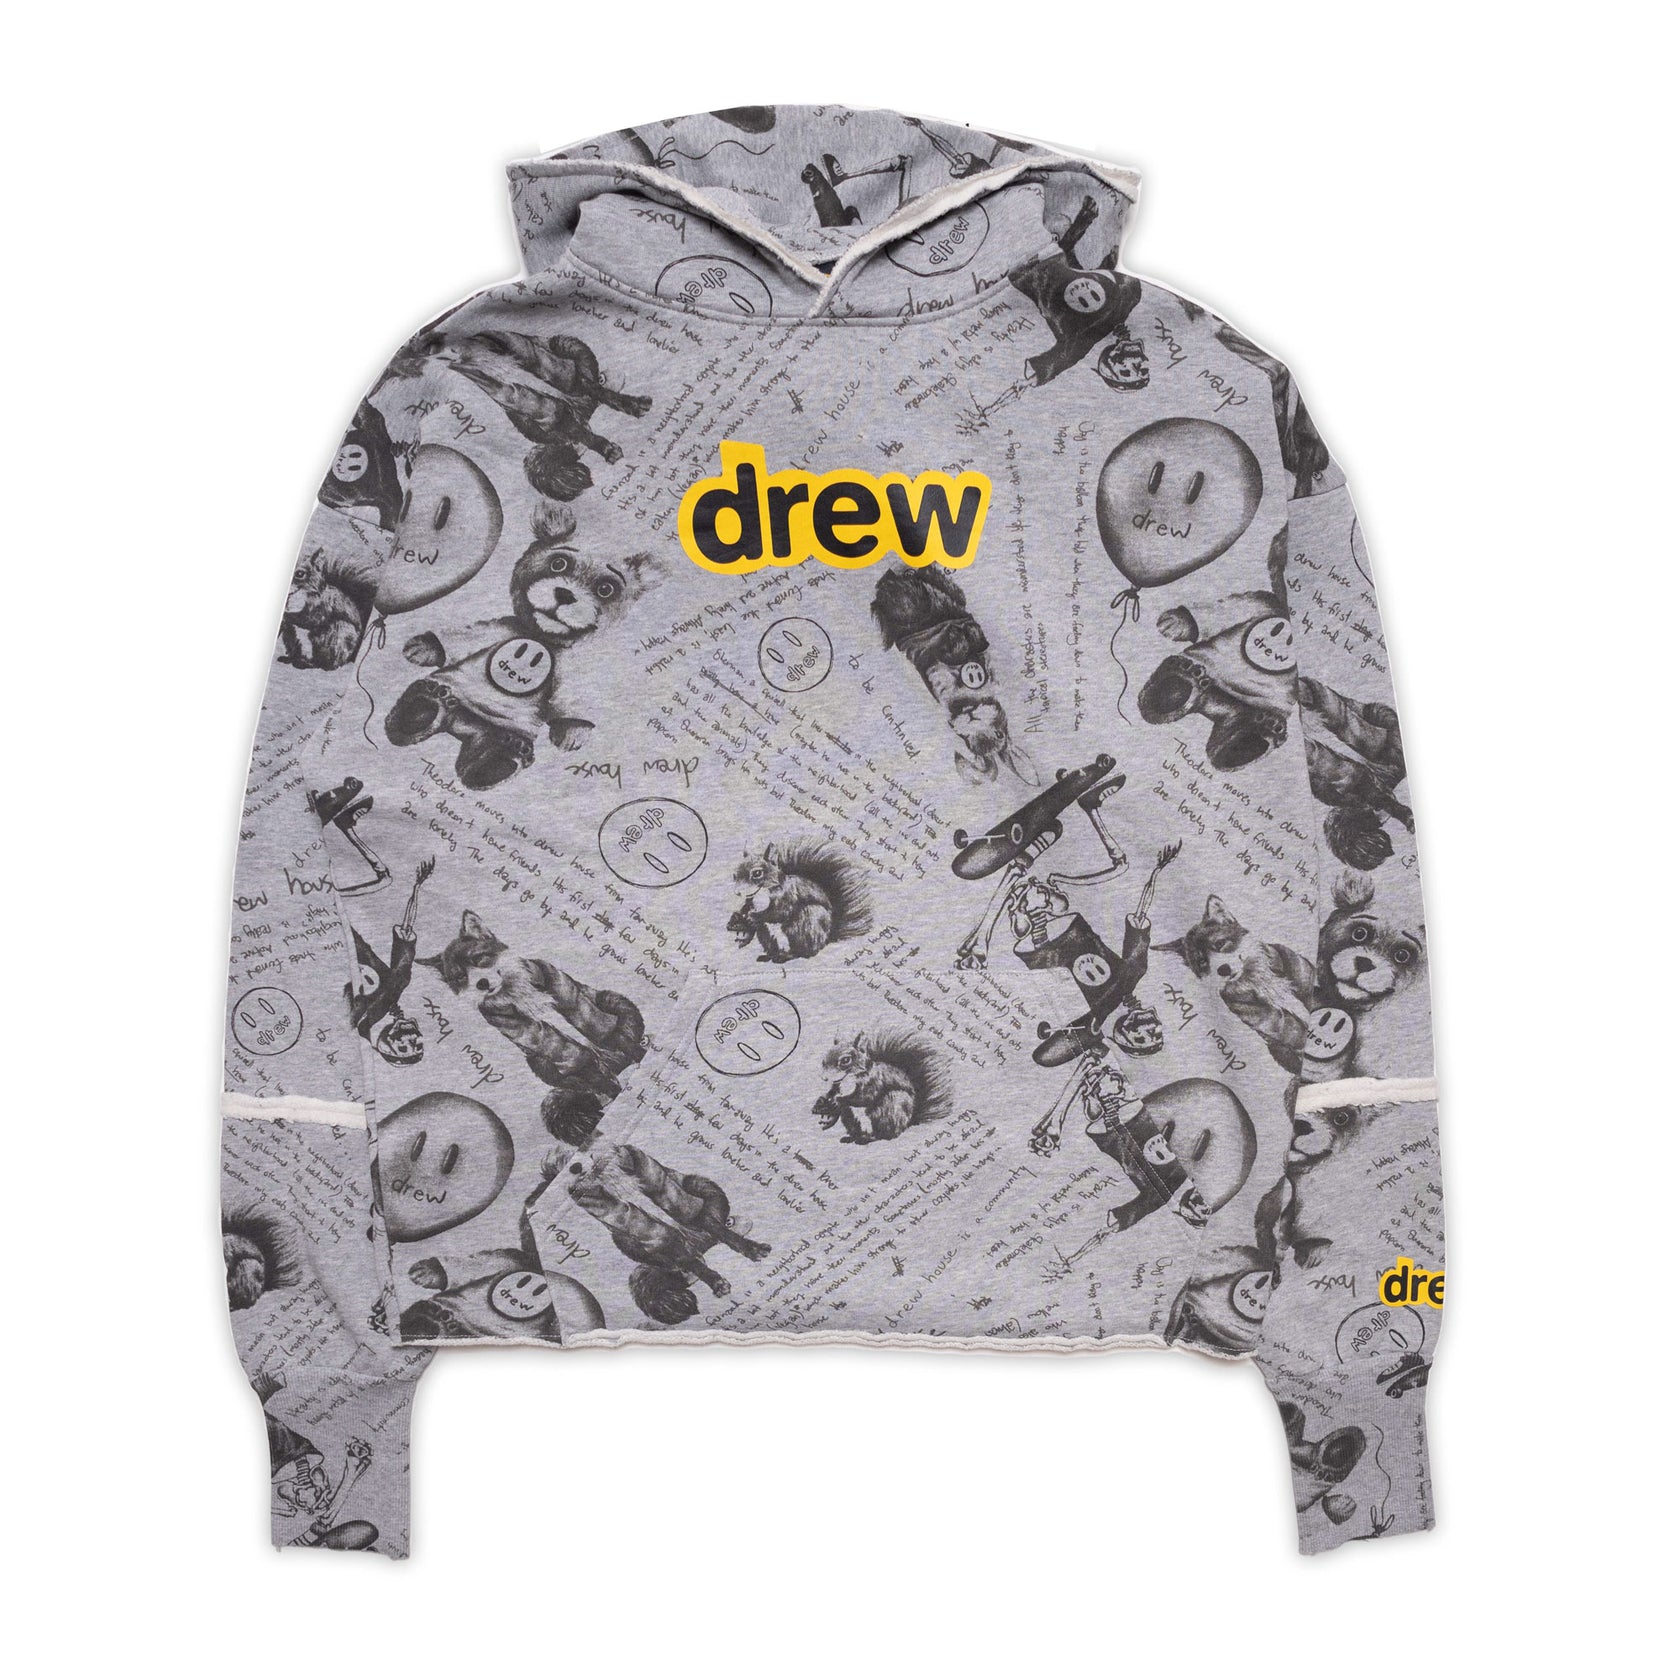 drew house secret deconstructed hoodie idears/heather grey